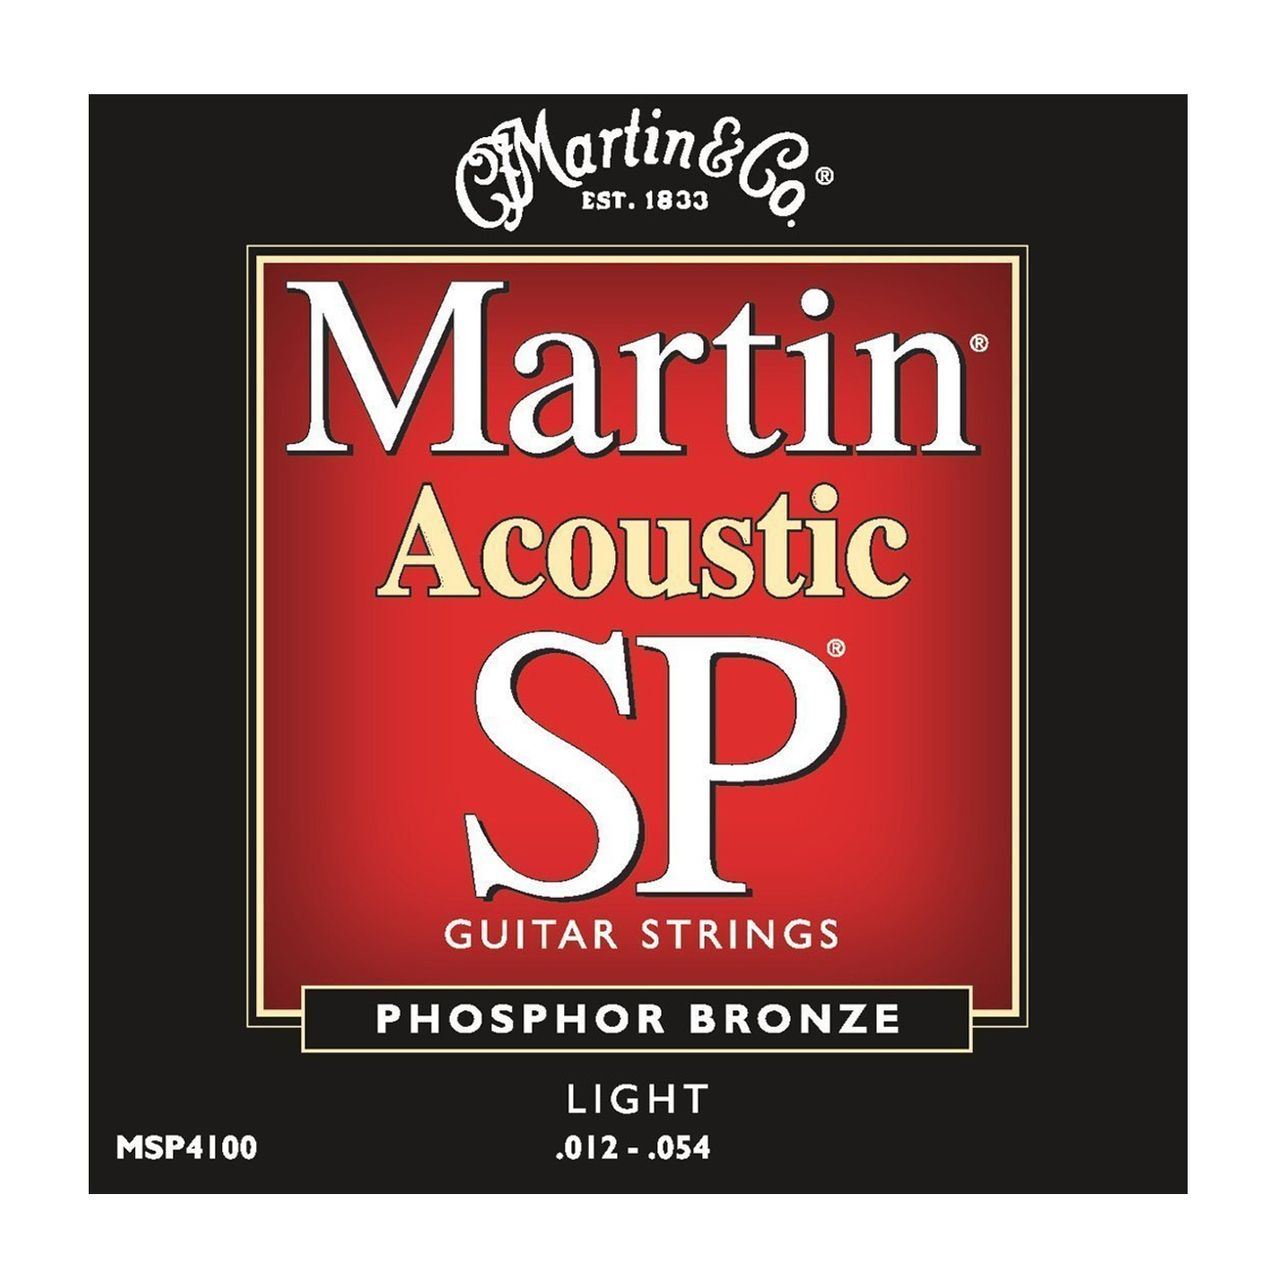 Martin & Co MSP 4100